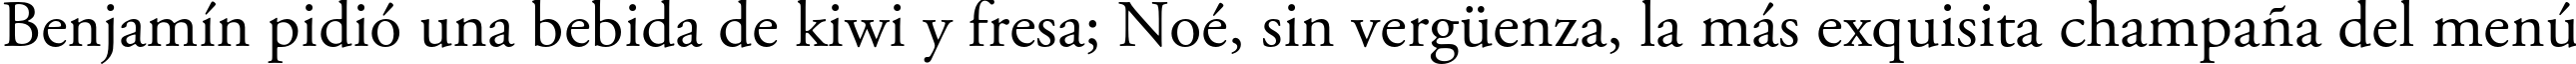 Пример написания шрифтом Adobe Garamond Pro текста на испанском